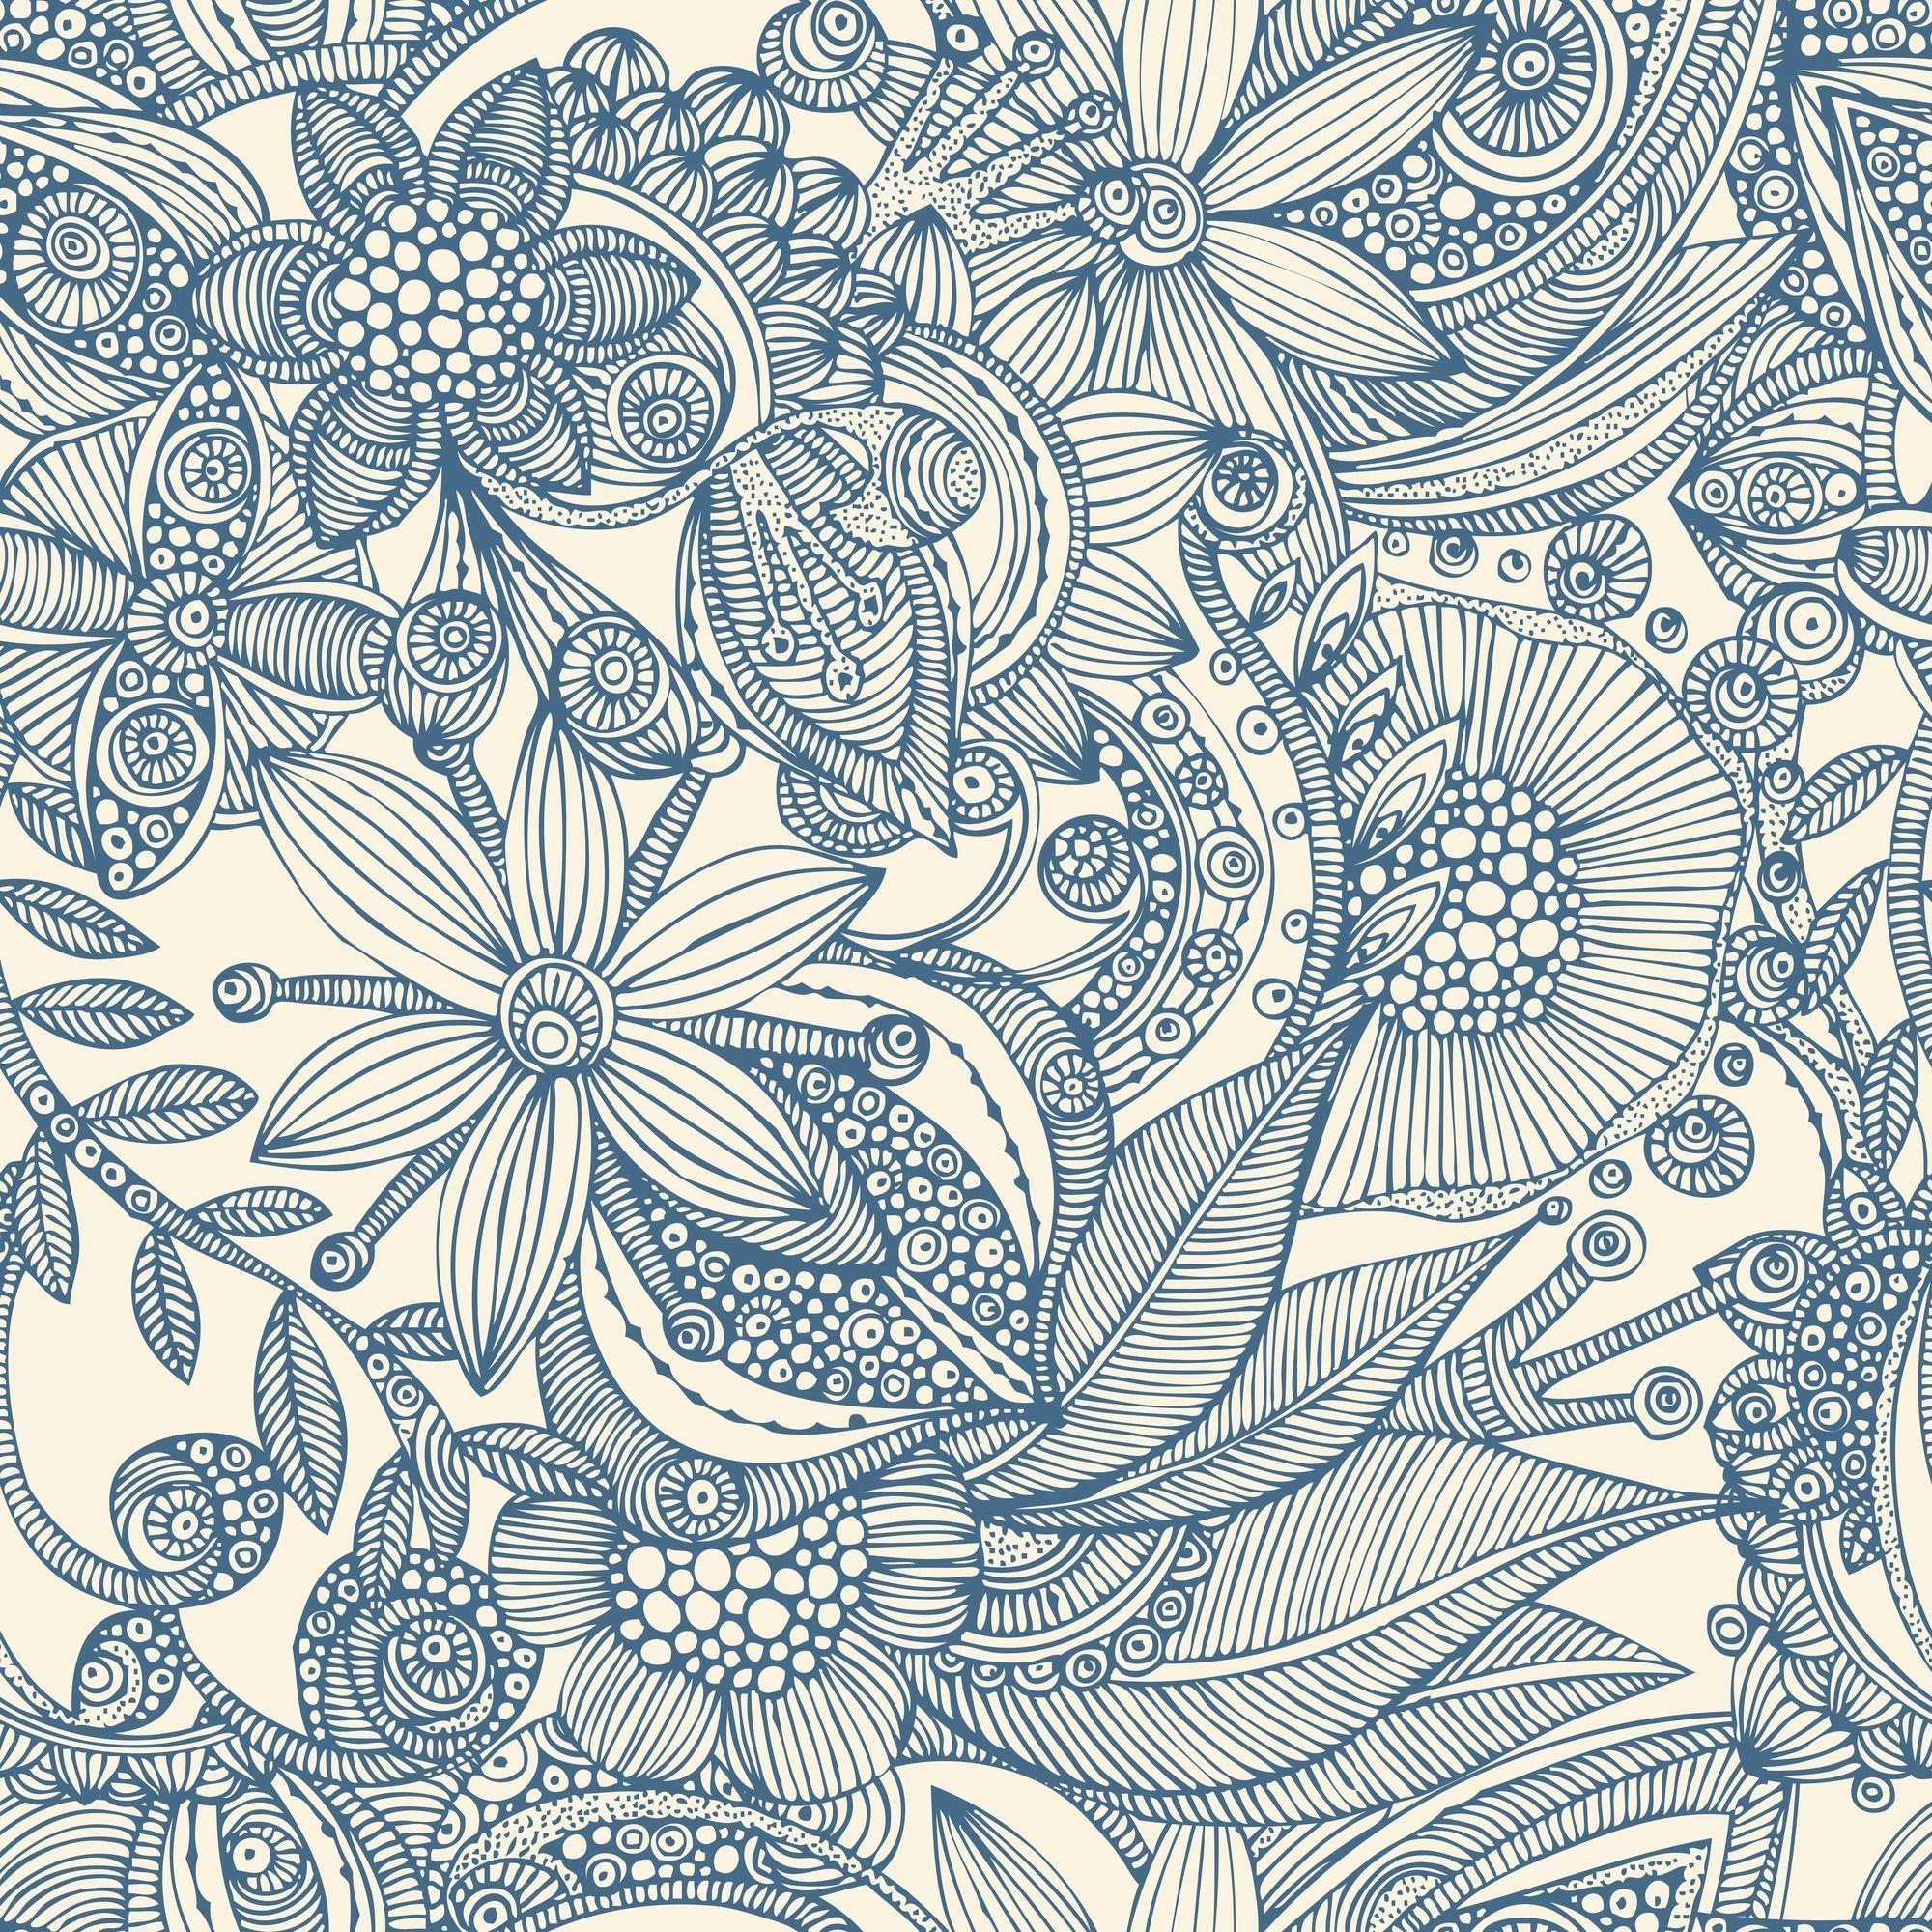 Flower Doodle Wallpapers - Top Free Flower Doodle Backgrounds